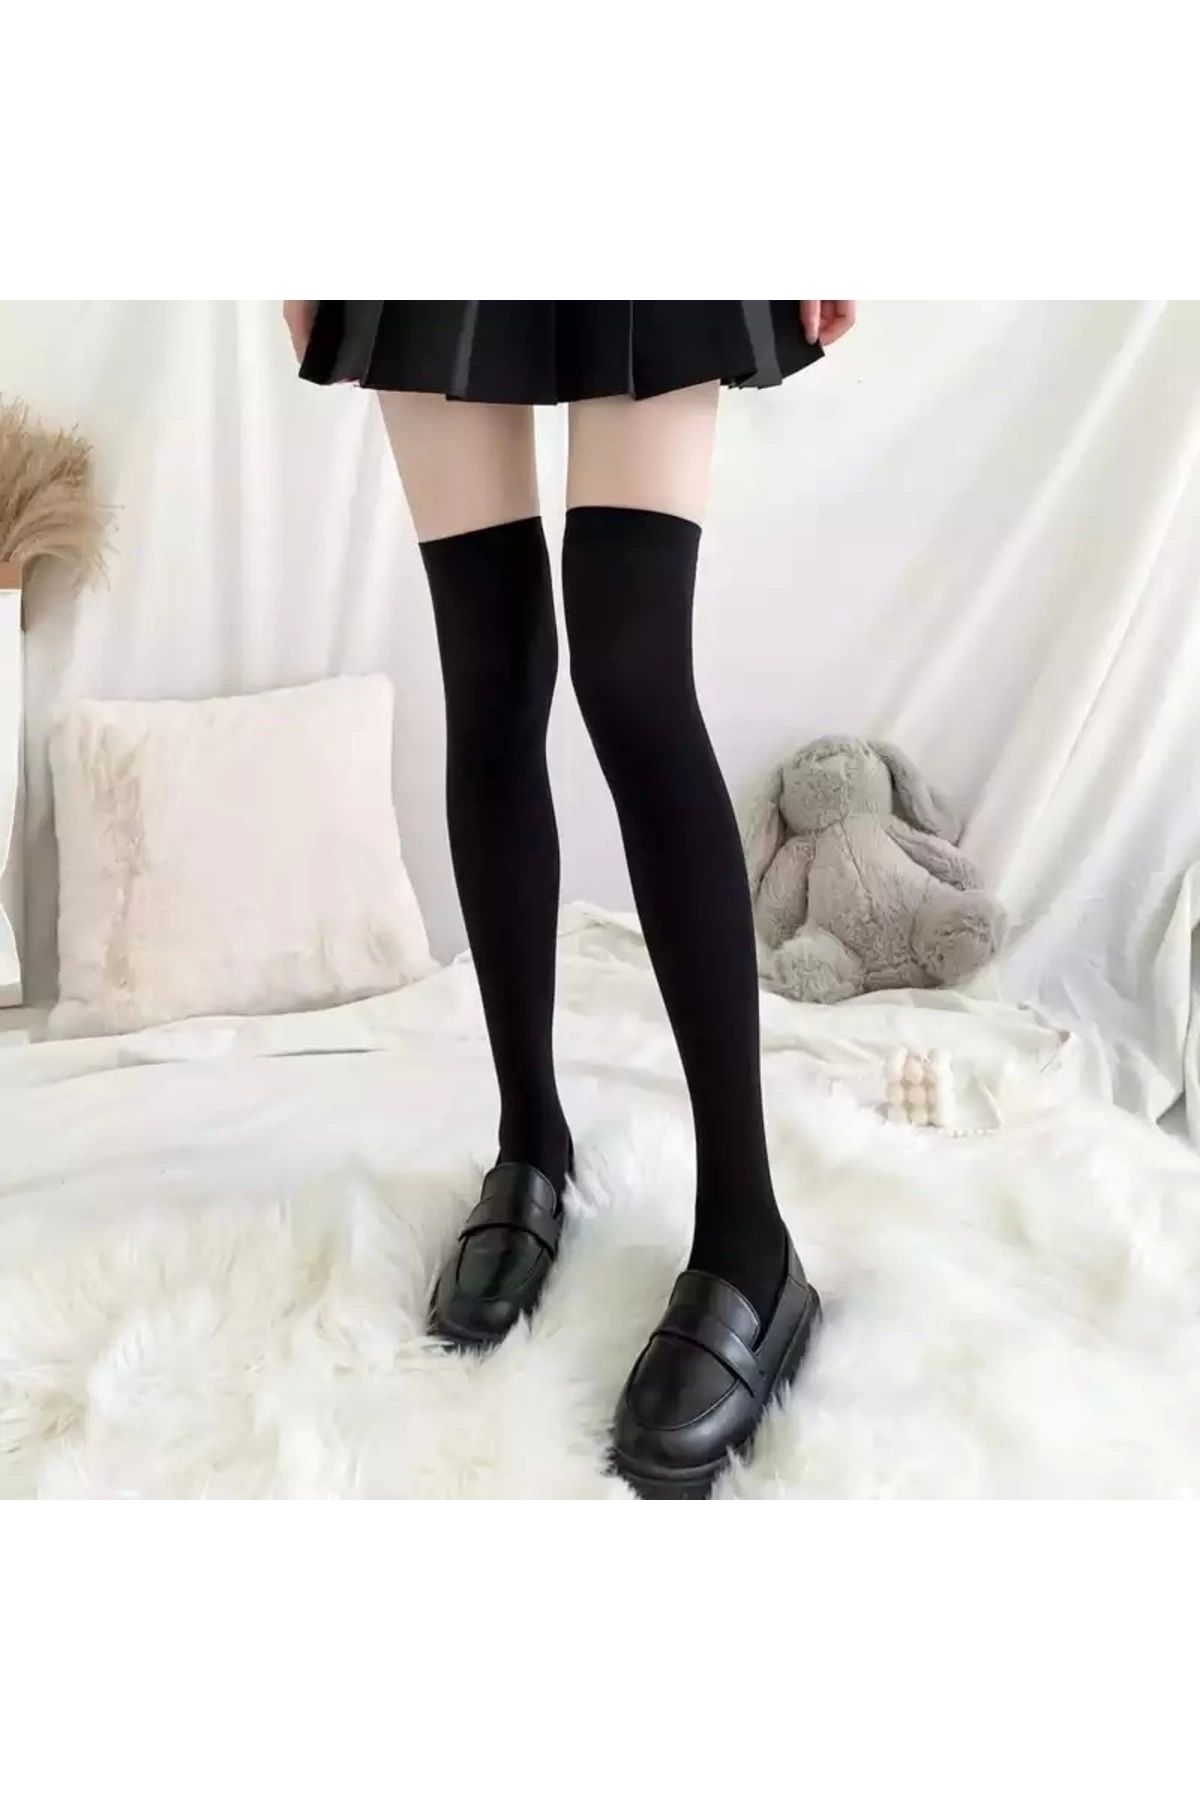 DarkellaStore Gotik Lolita Harajuku Diz Üstü Siyah Çorap